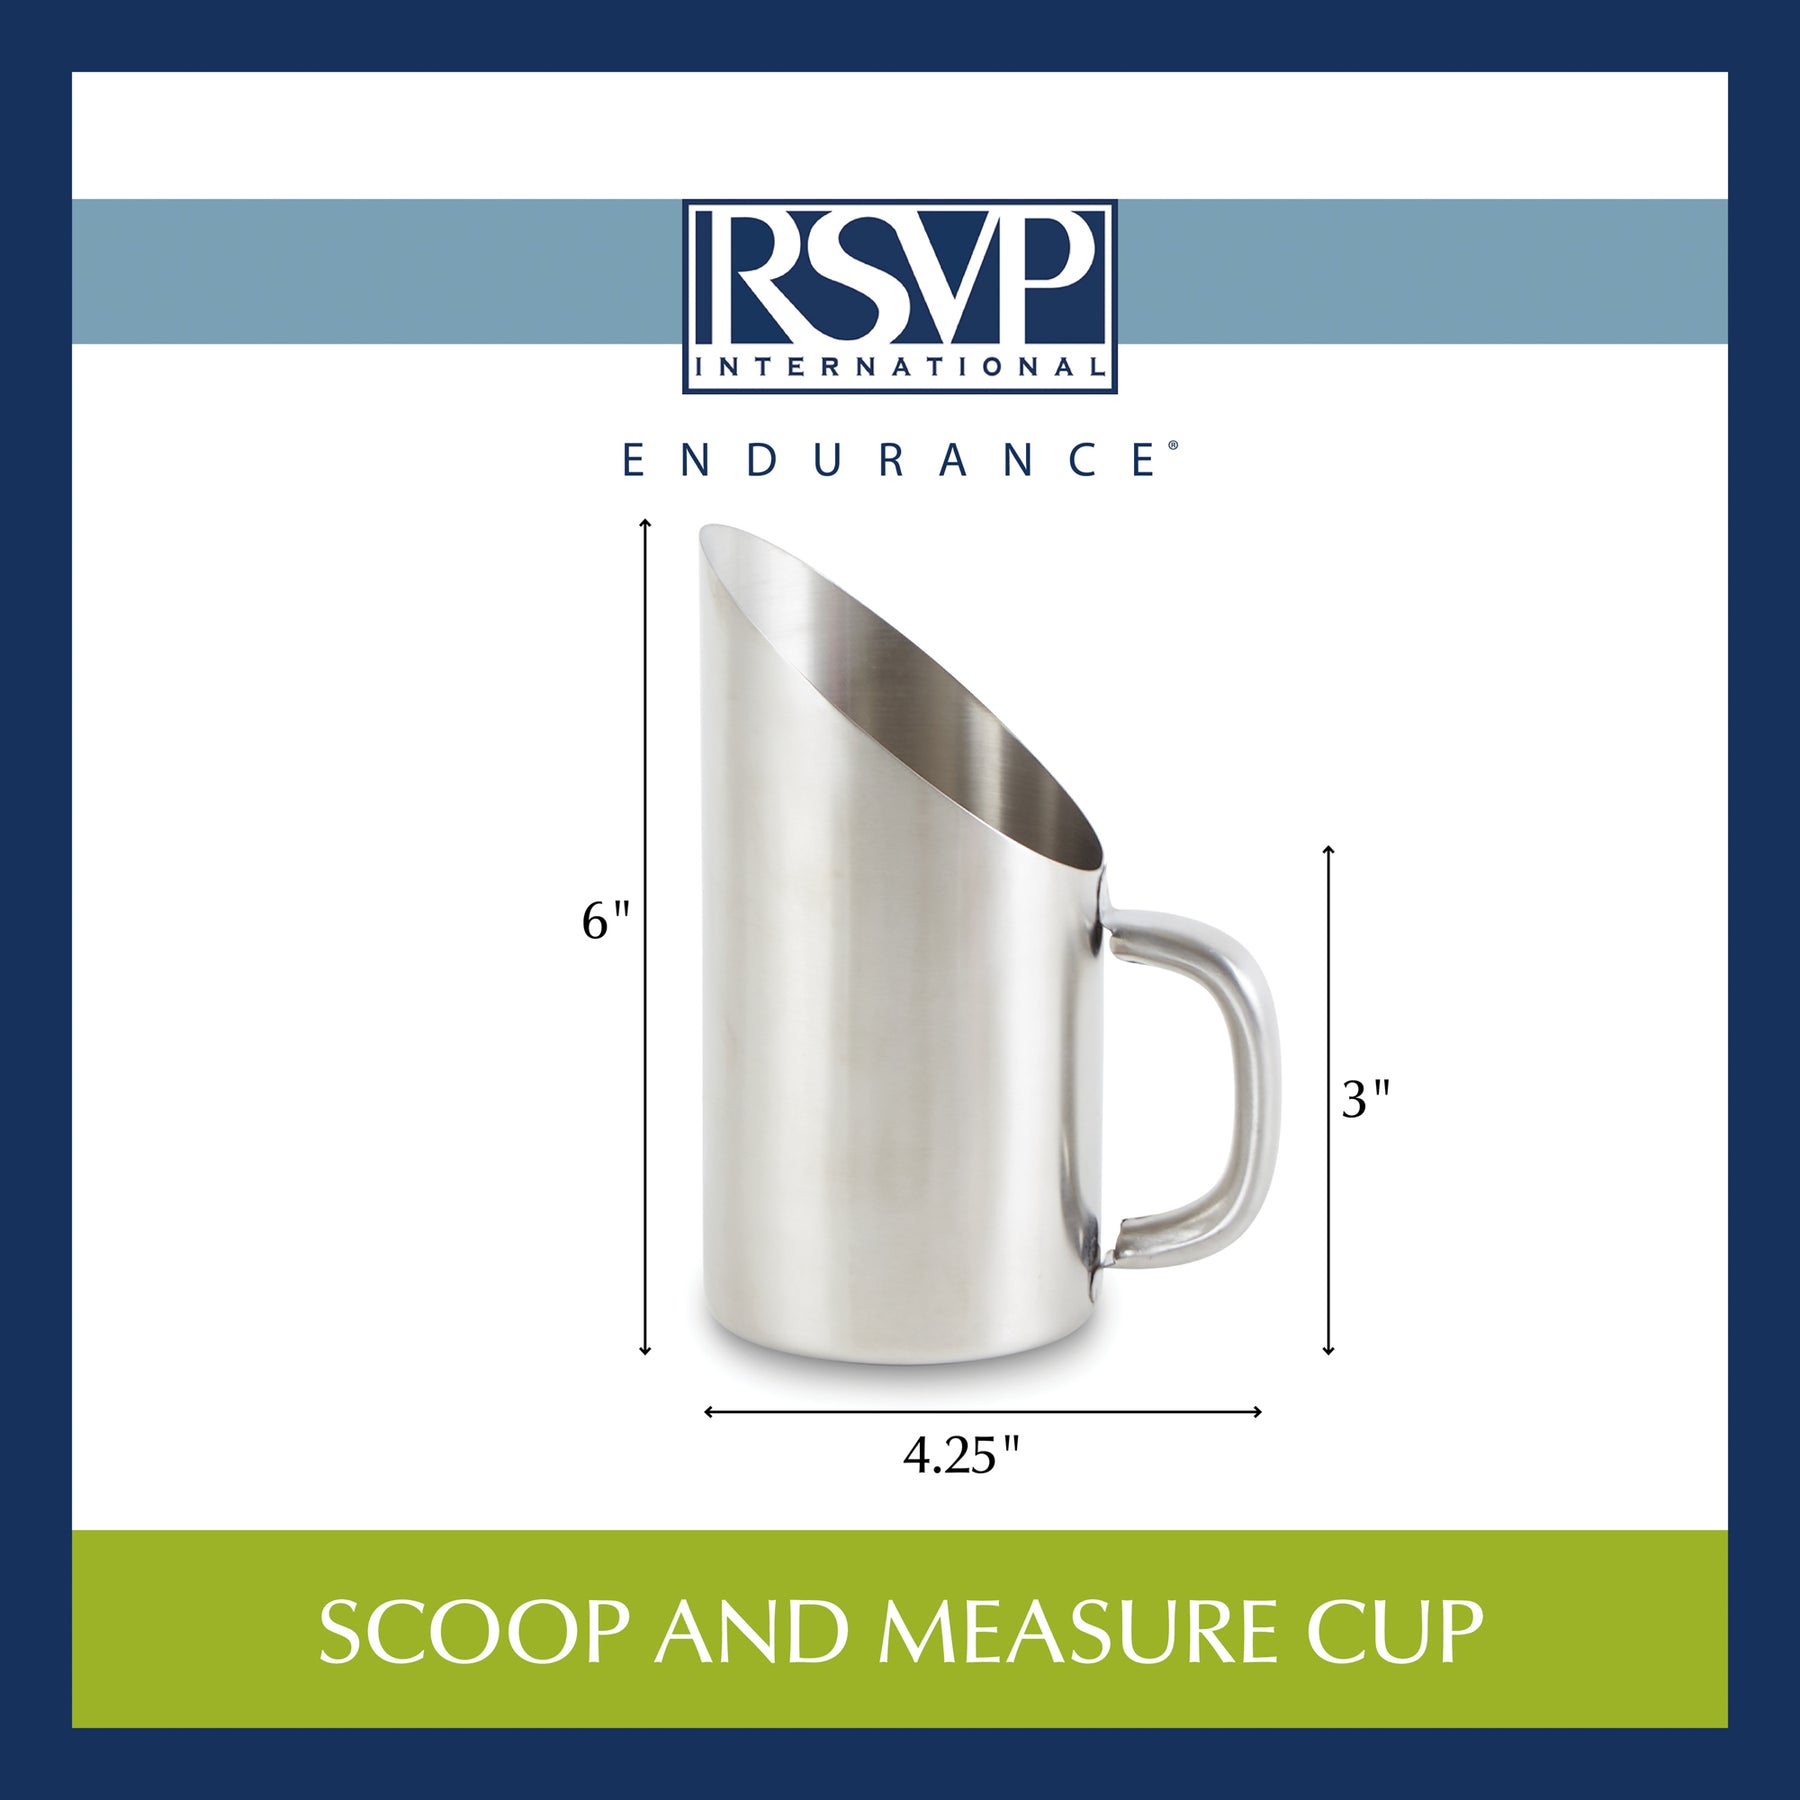 RSVP International Endurance Oval Measuring Scoop, 1/2 cup, Stainless Steel